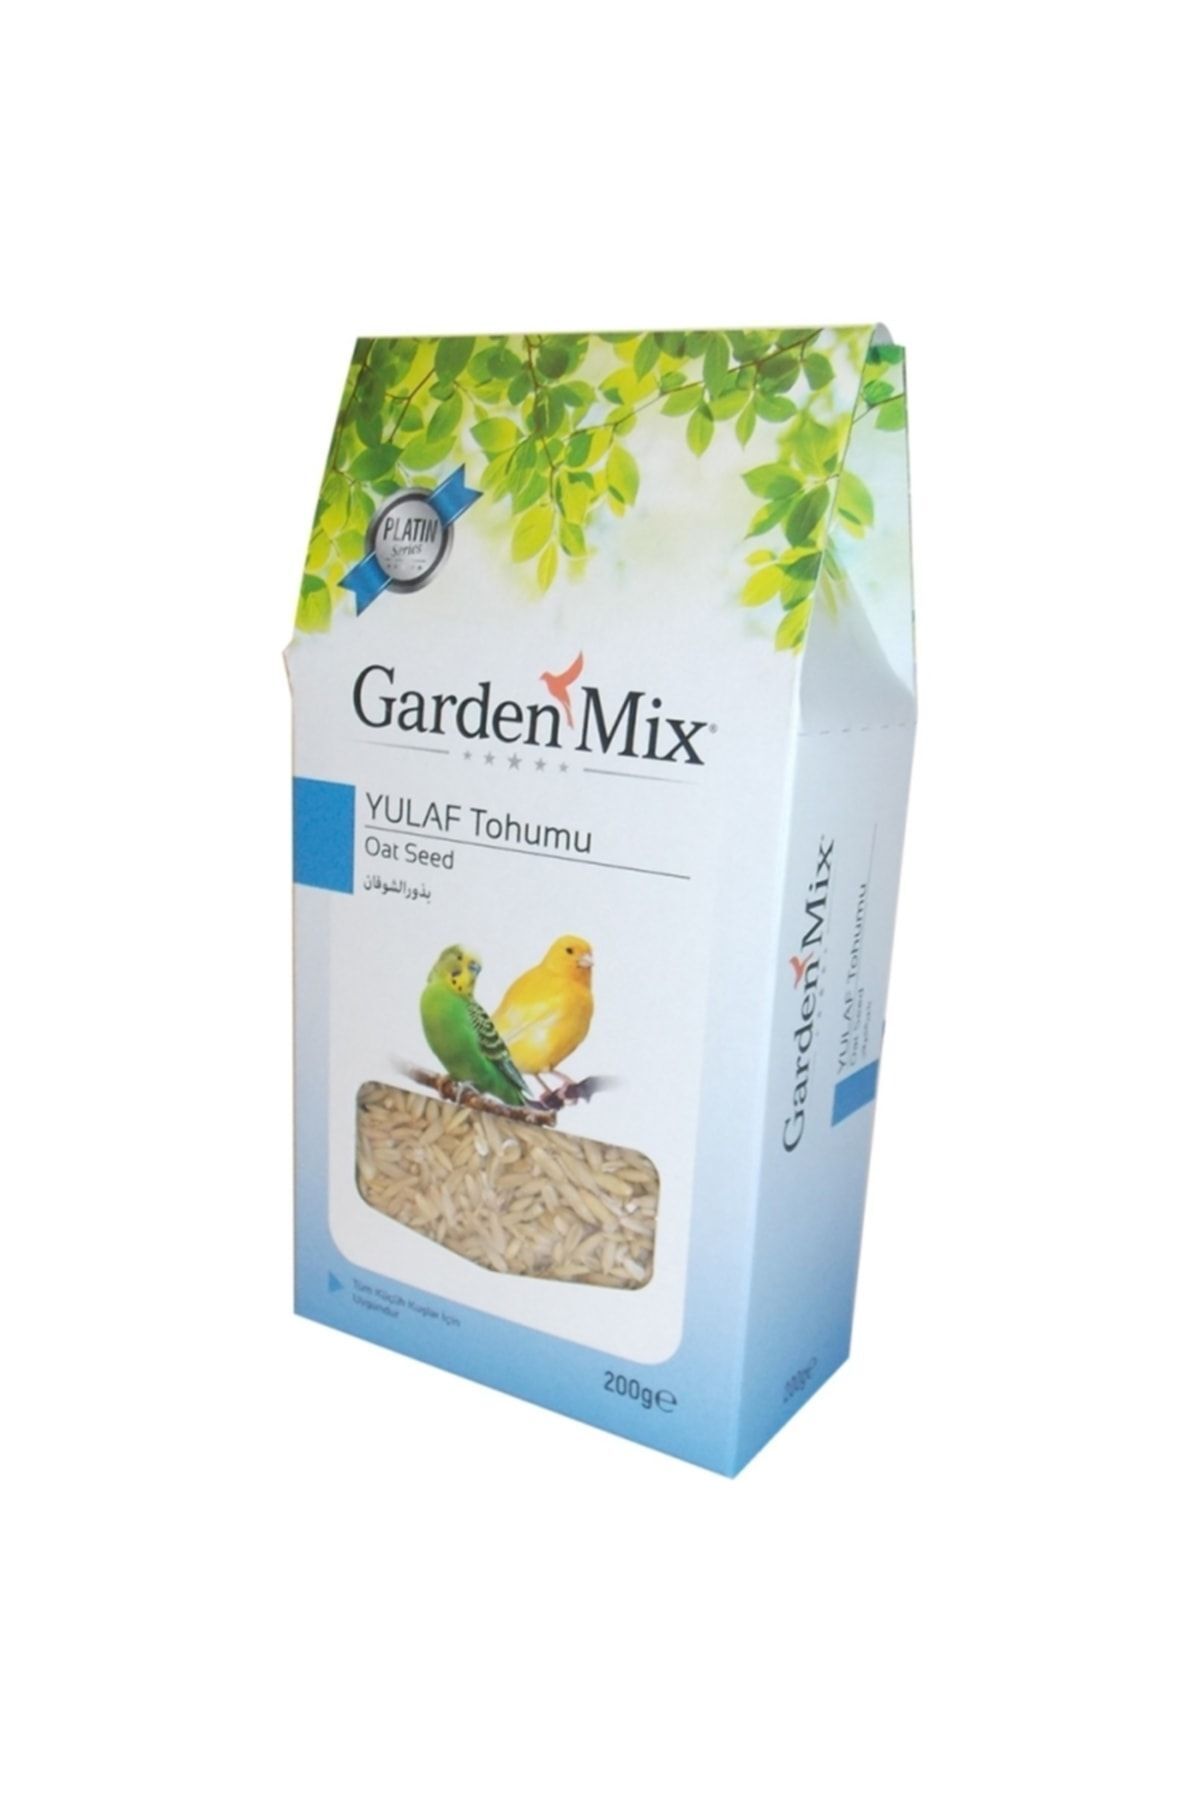 Gardenmix Gardenmıx Platin Yulaf Tohumu 200gr